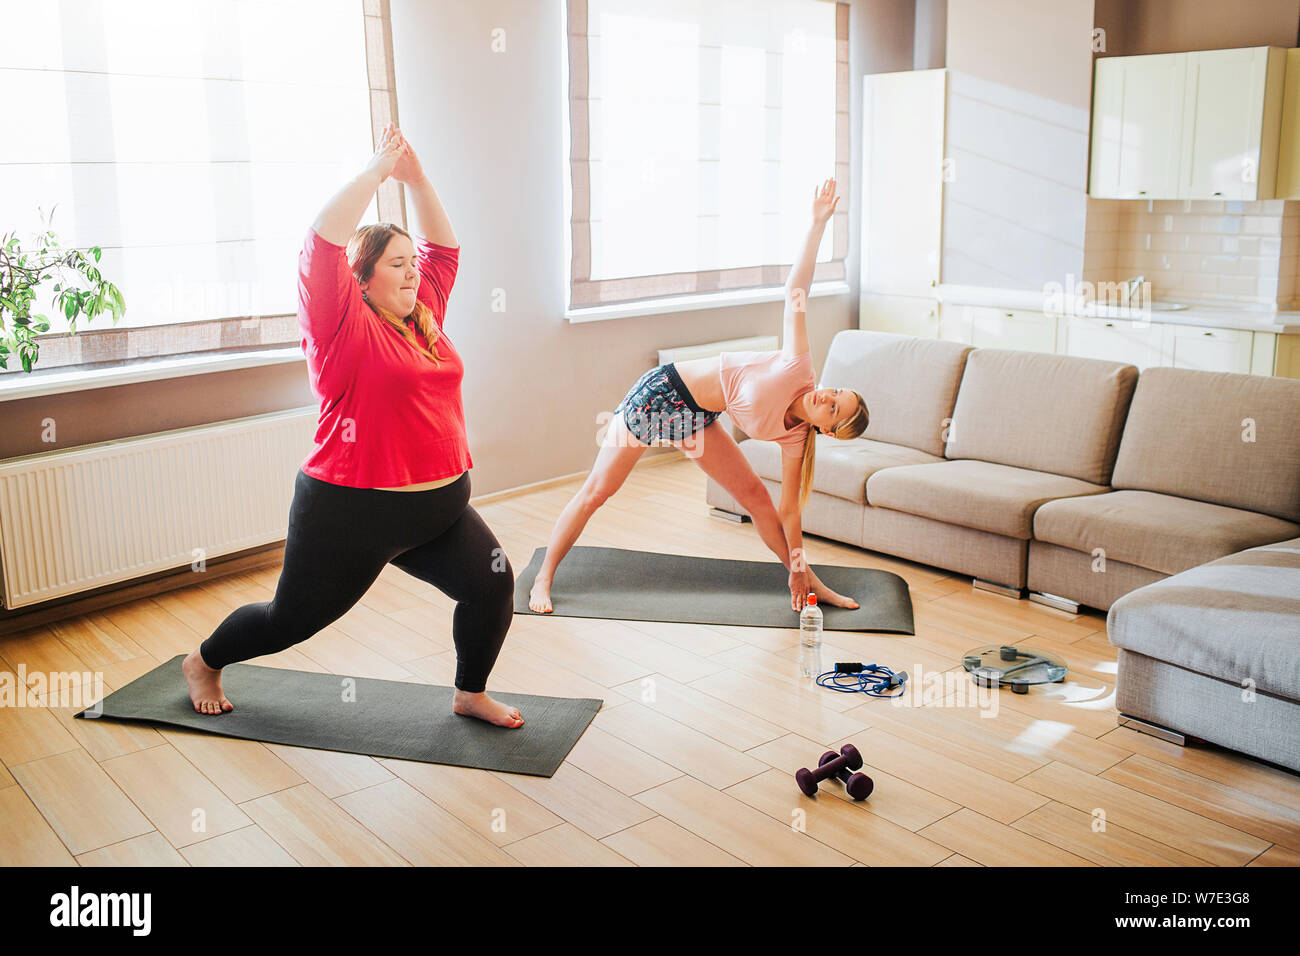 Dumbbell workout for women: 5 must-do exercises | HealthShots